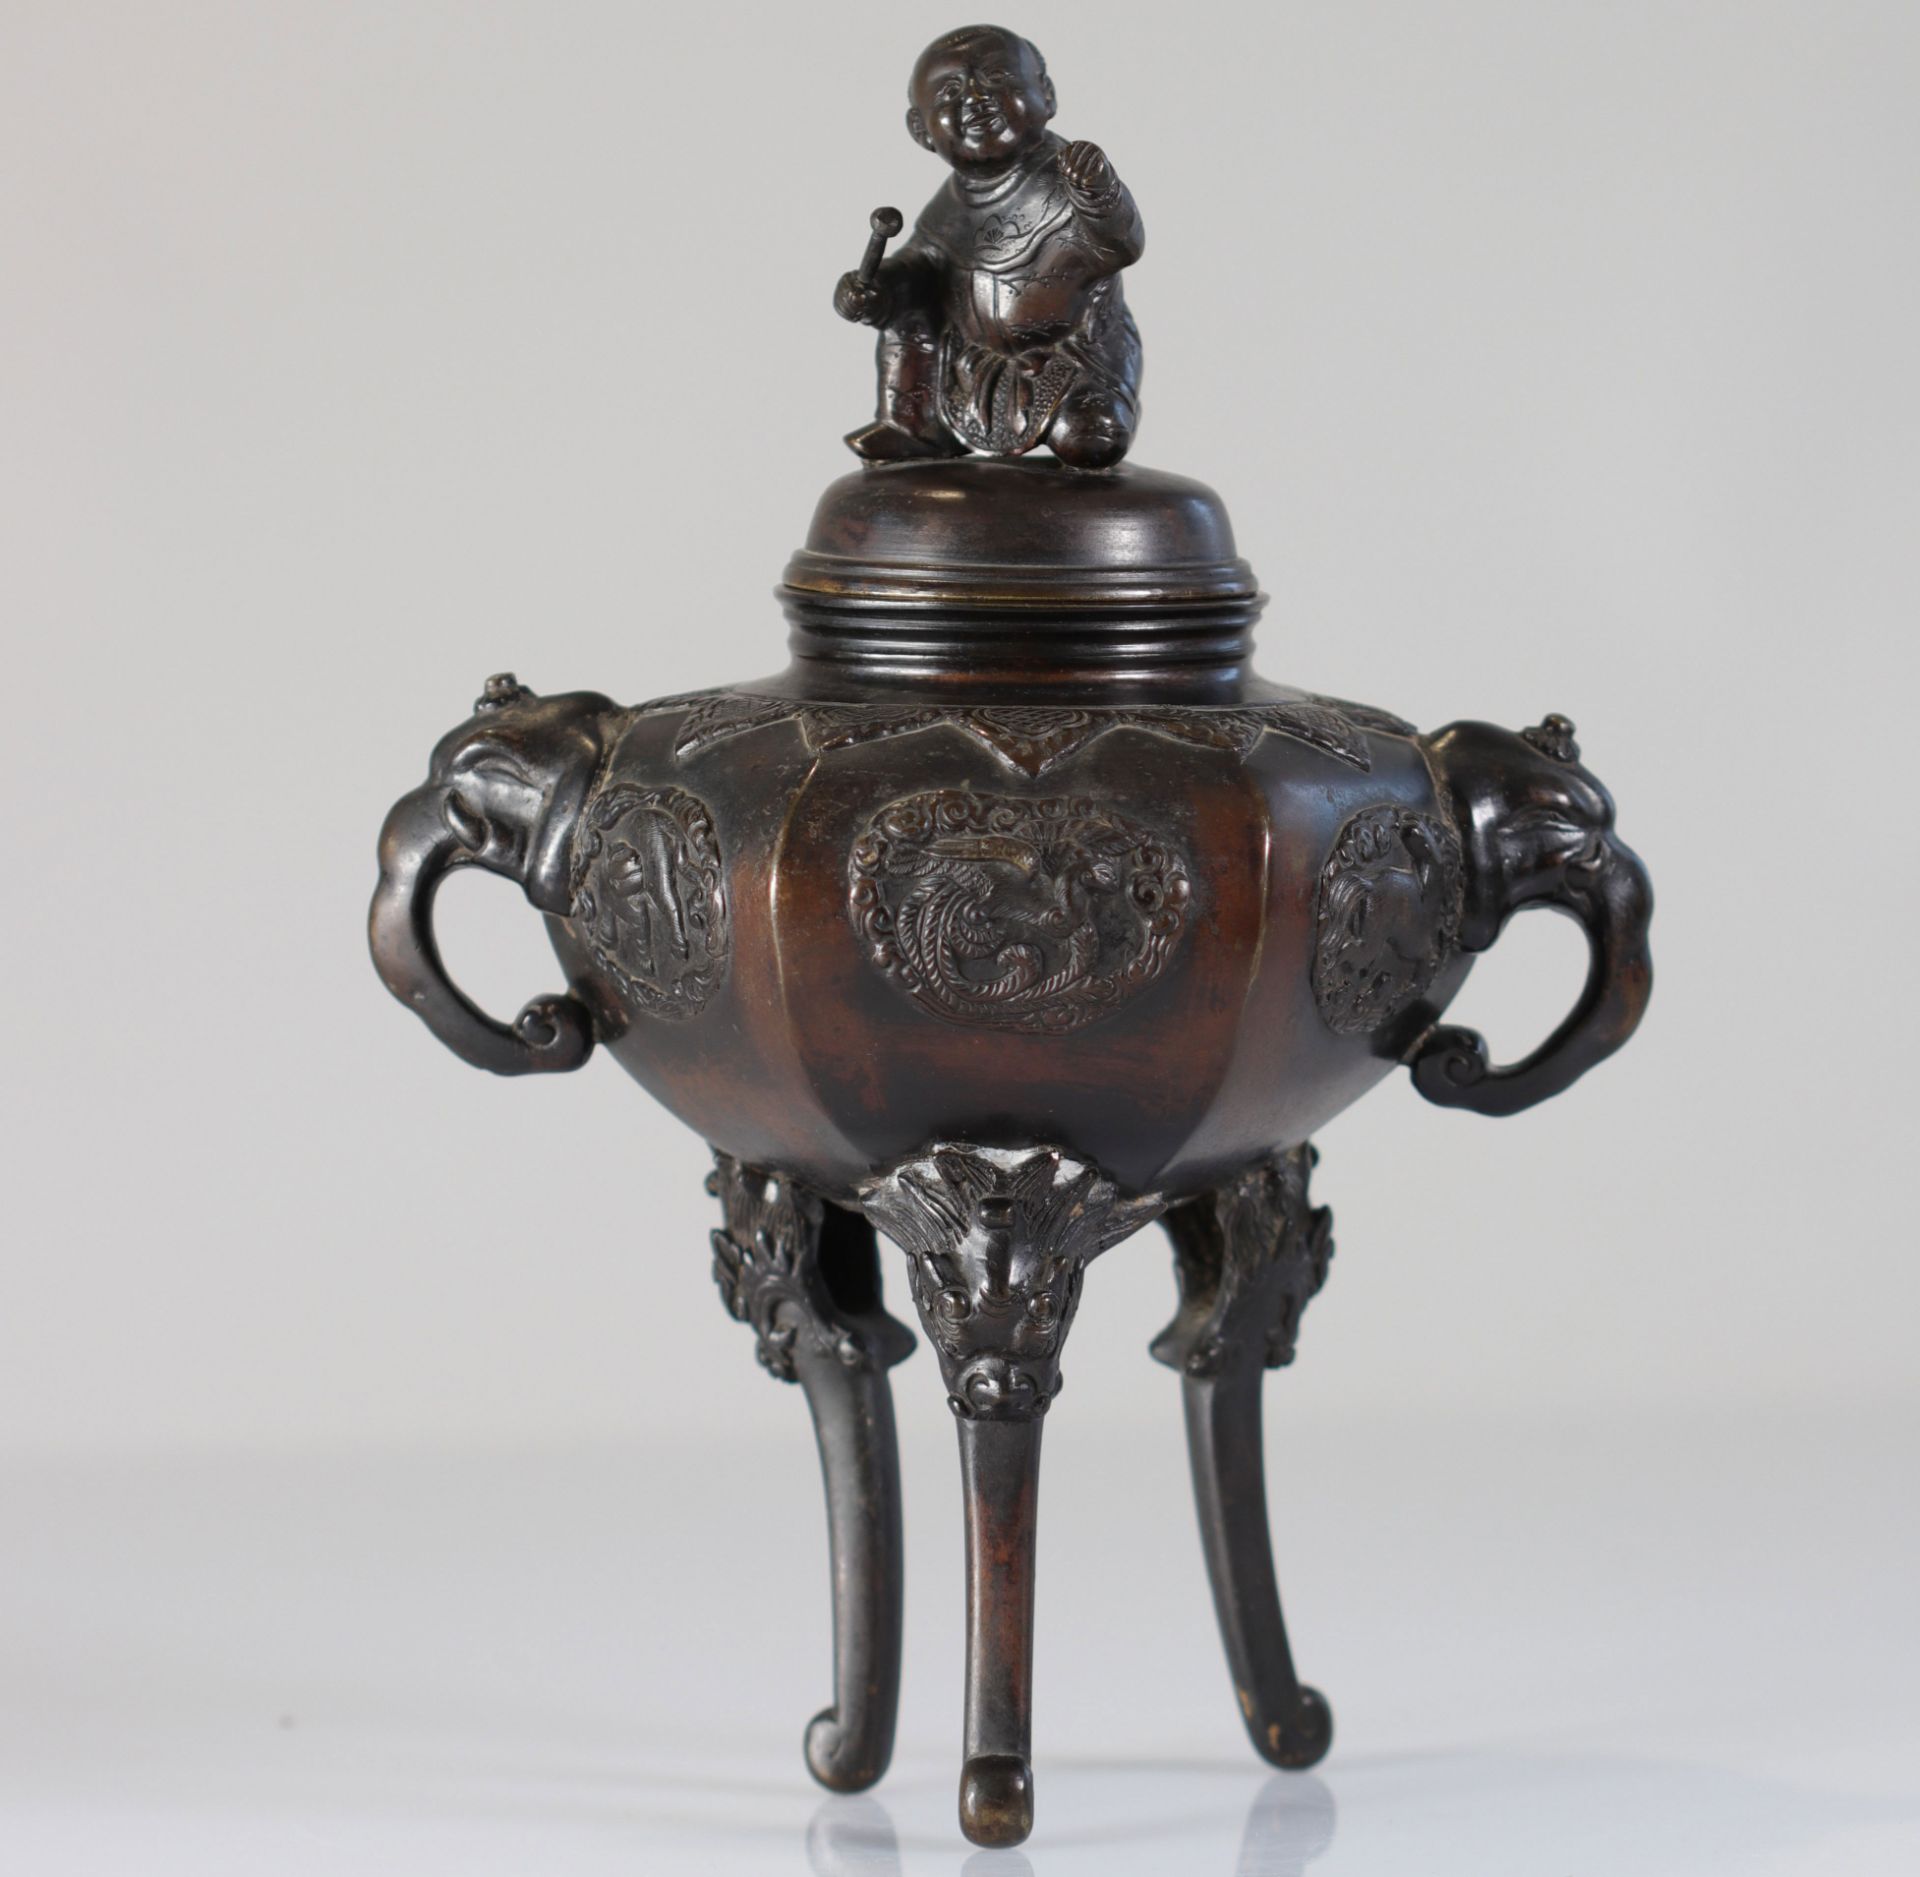 China bronze perfume burner surmounted by a character